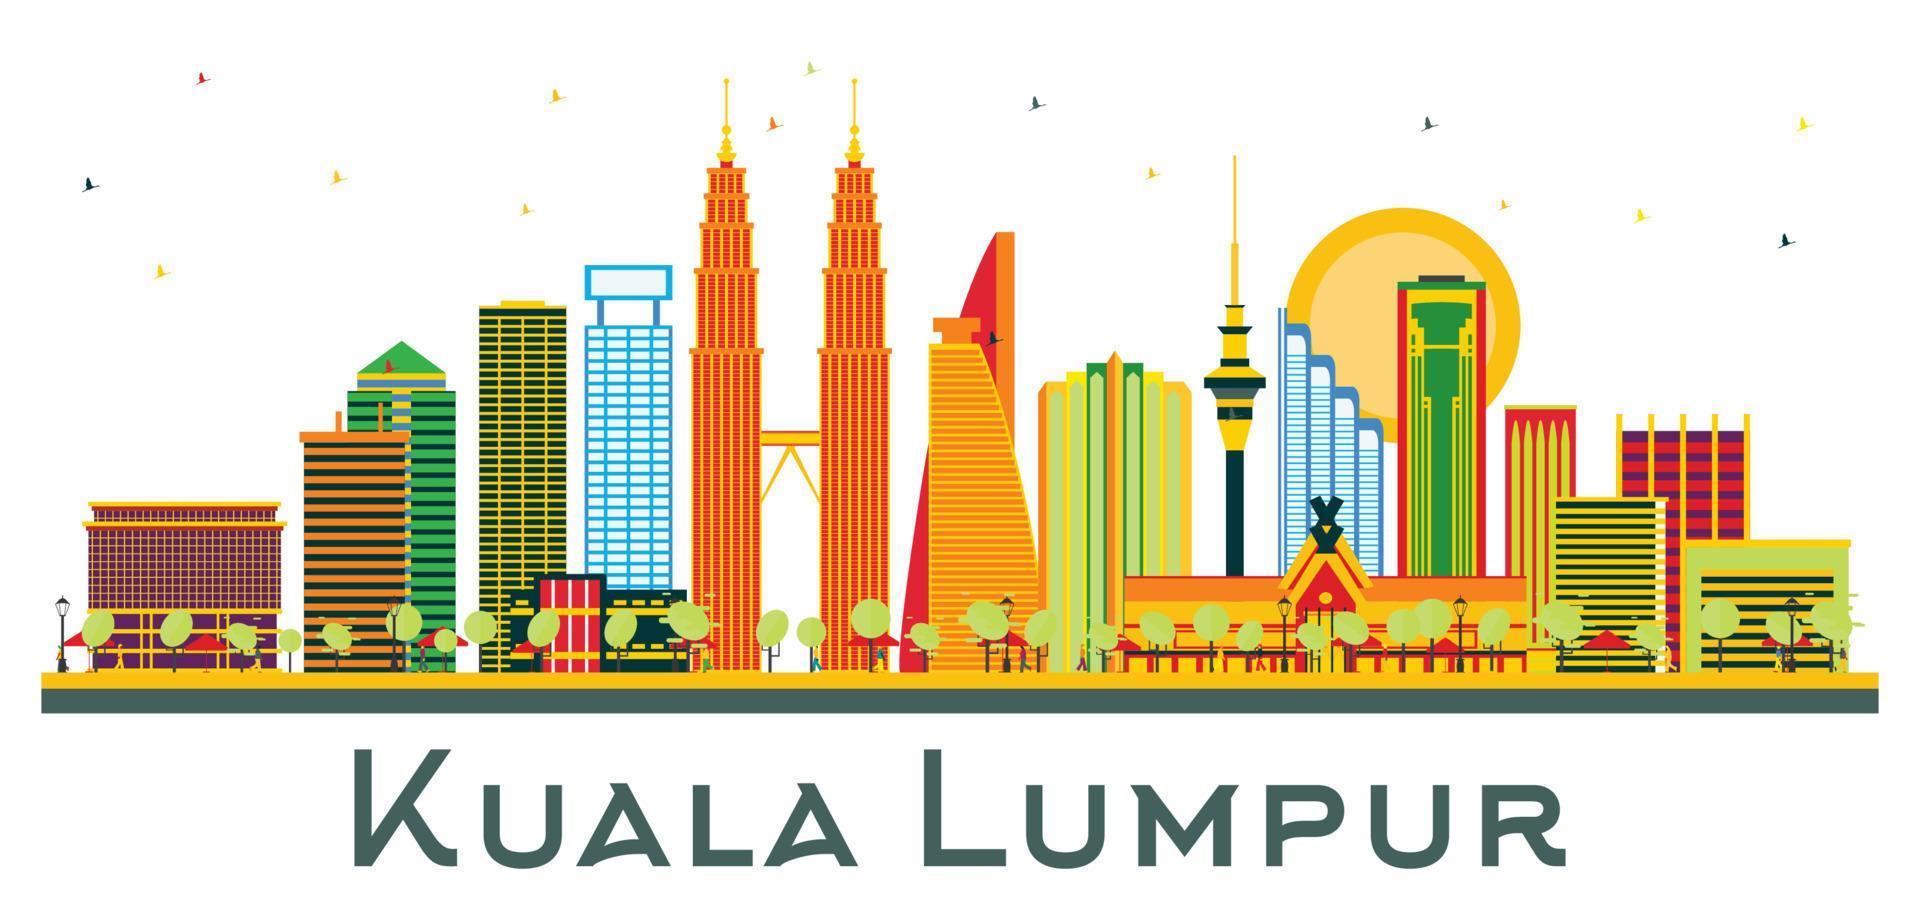 kuala lumpur malaysia city skyline mit farbigen gebäuden isoliert auf weiß. vektor